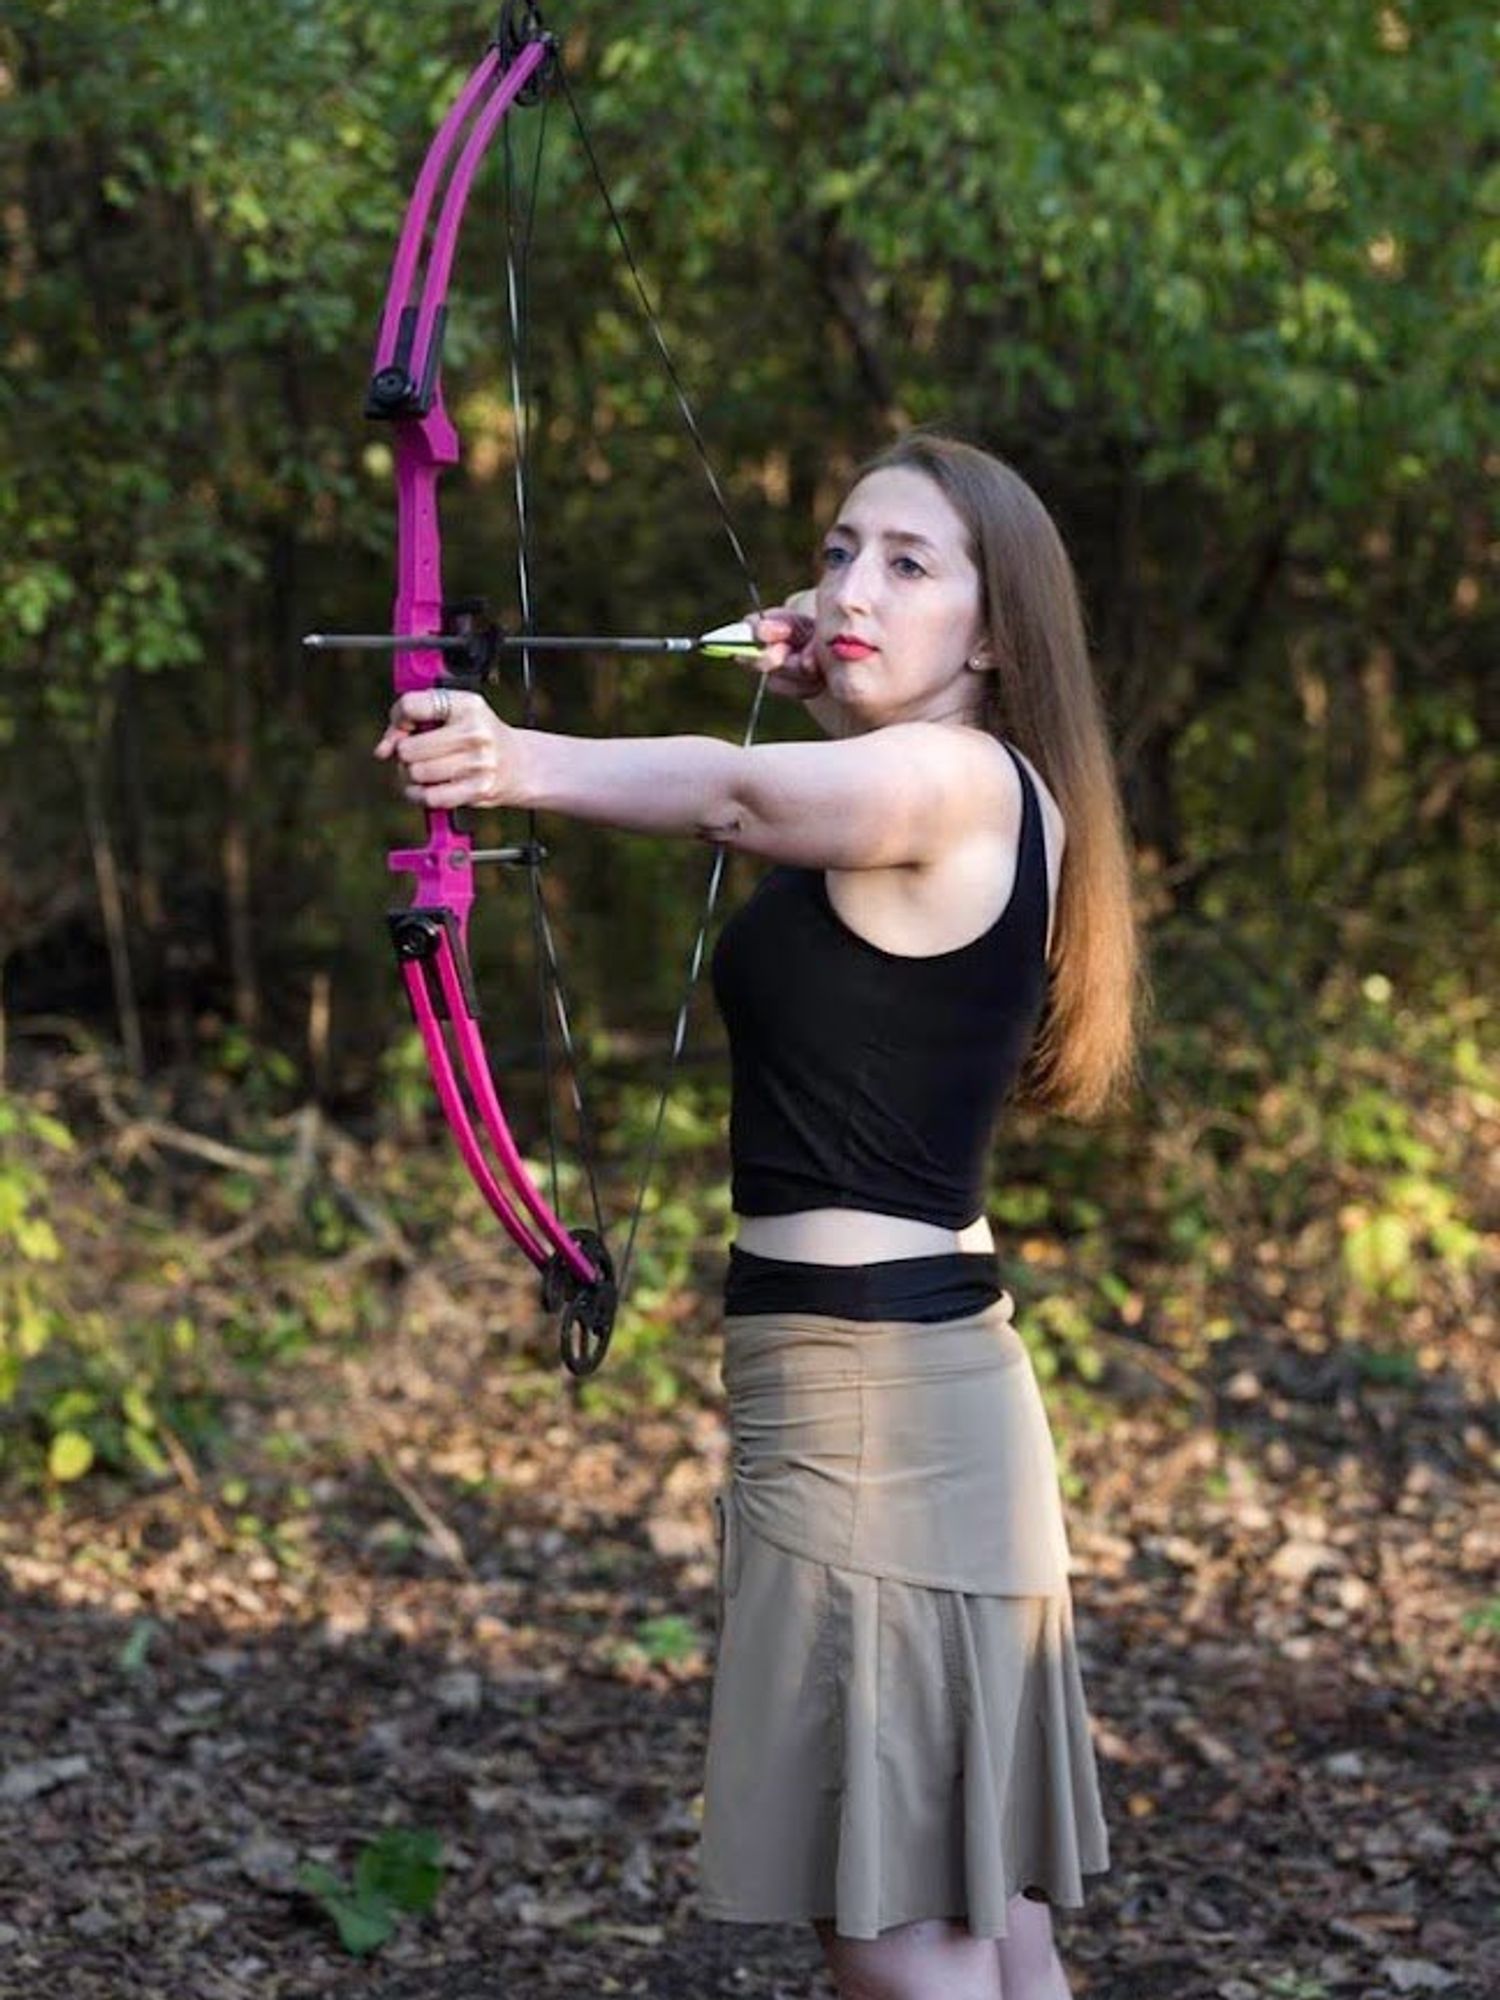 Alyssa Zeldenrust shooting a bow and arrow